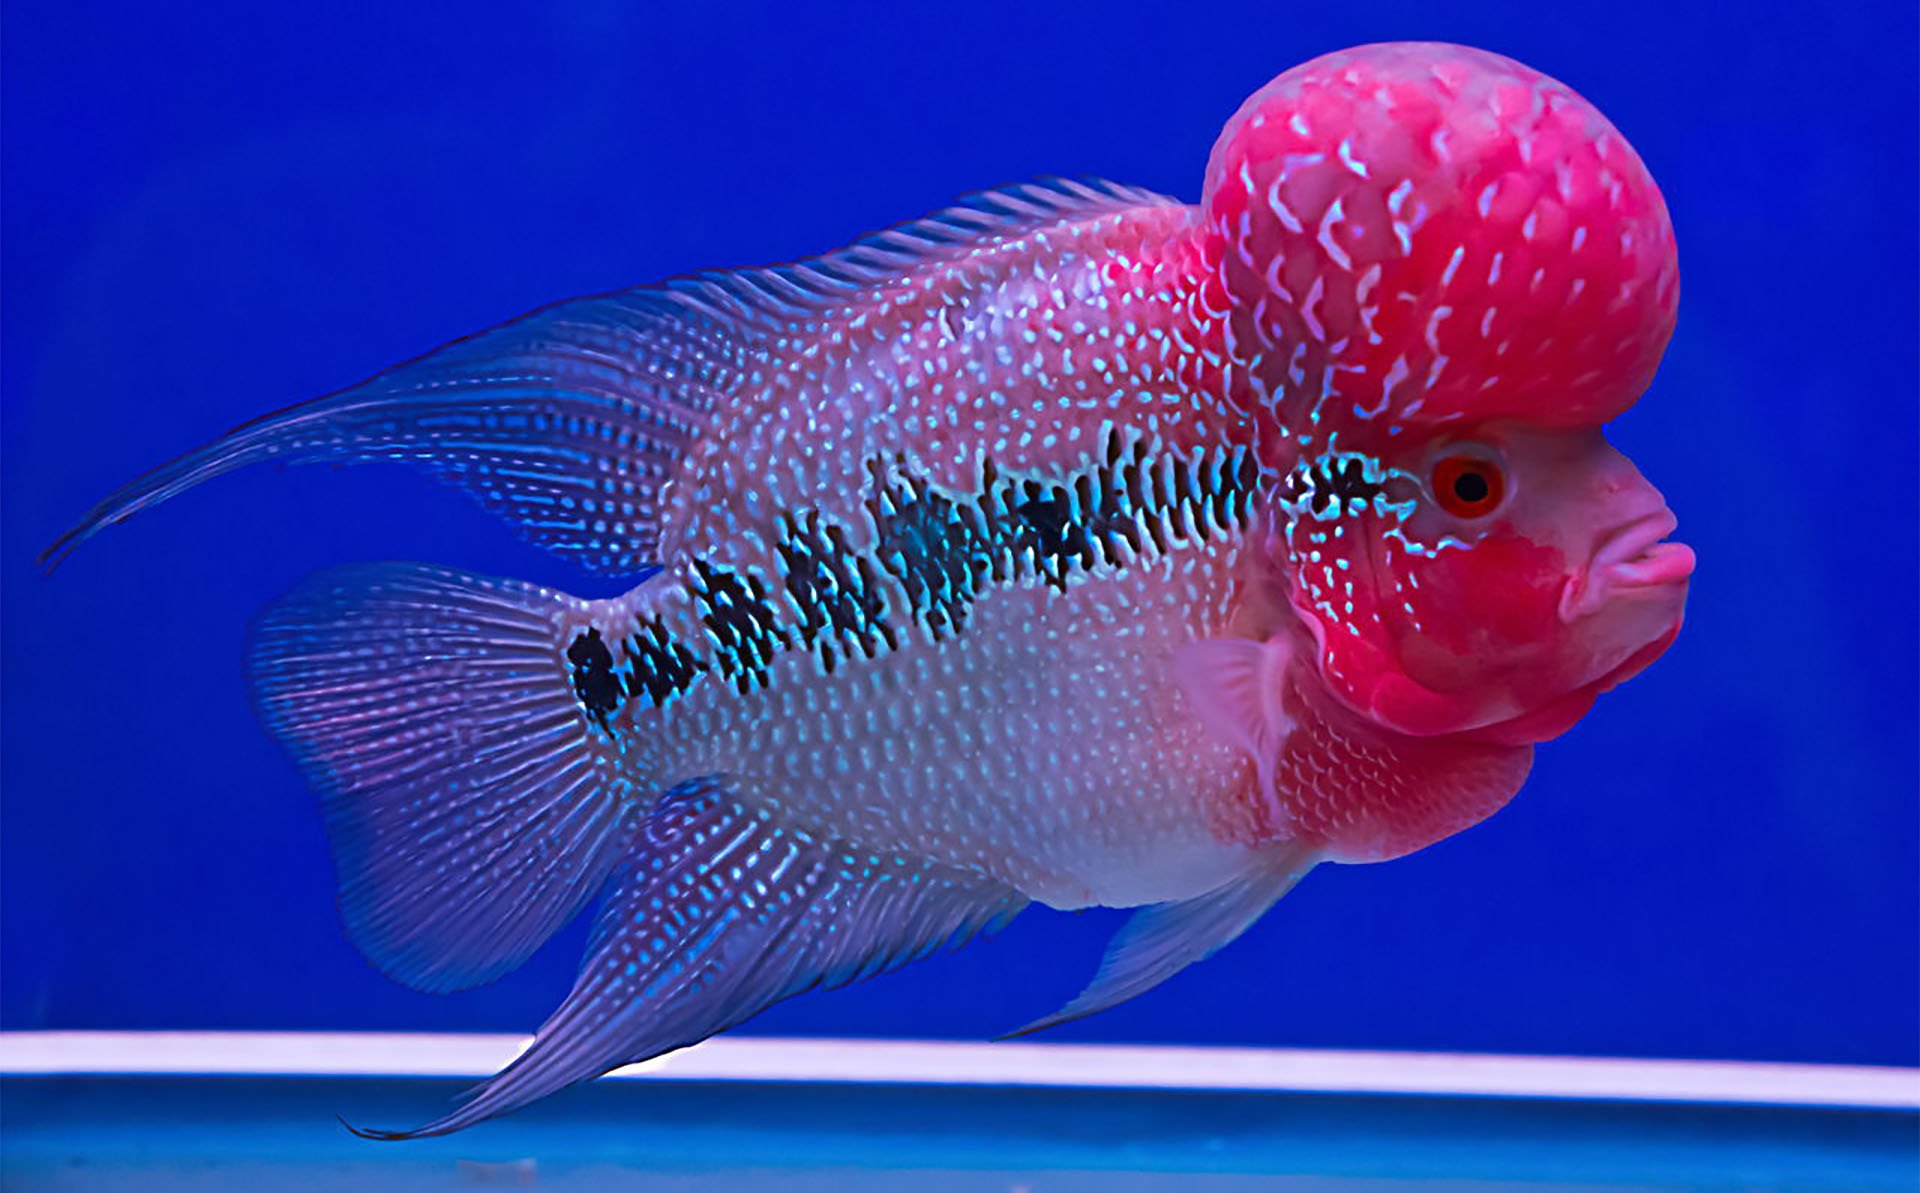 Flowerhorn Fish Photos Download The BEST Free Flowerhorn Fish Stock Photos   HD Images